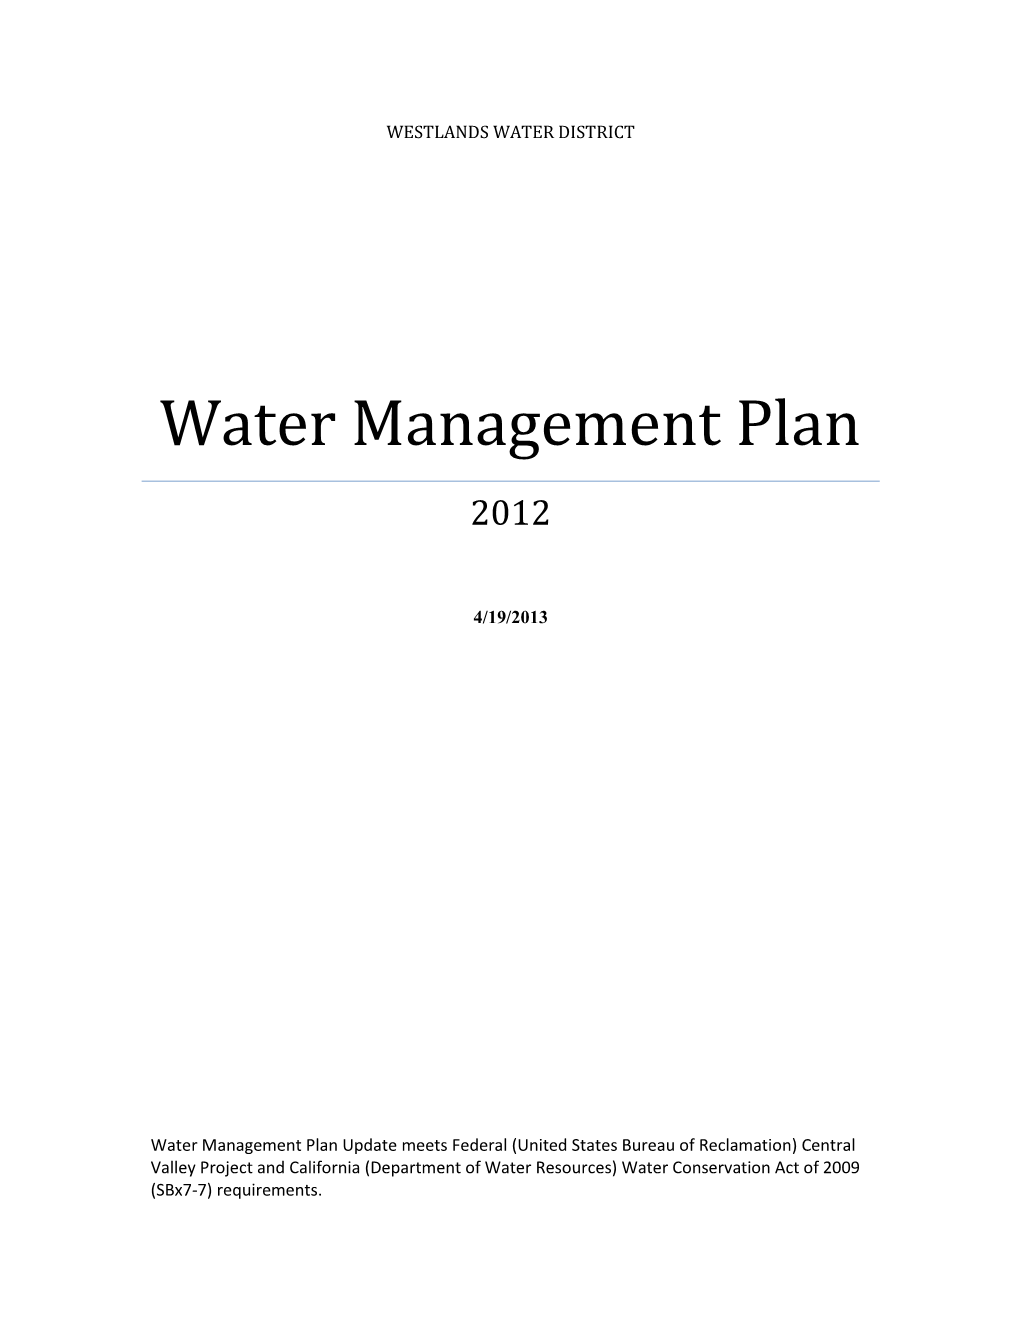 Water Management Plan 2012